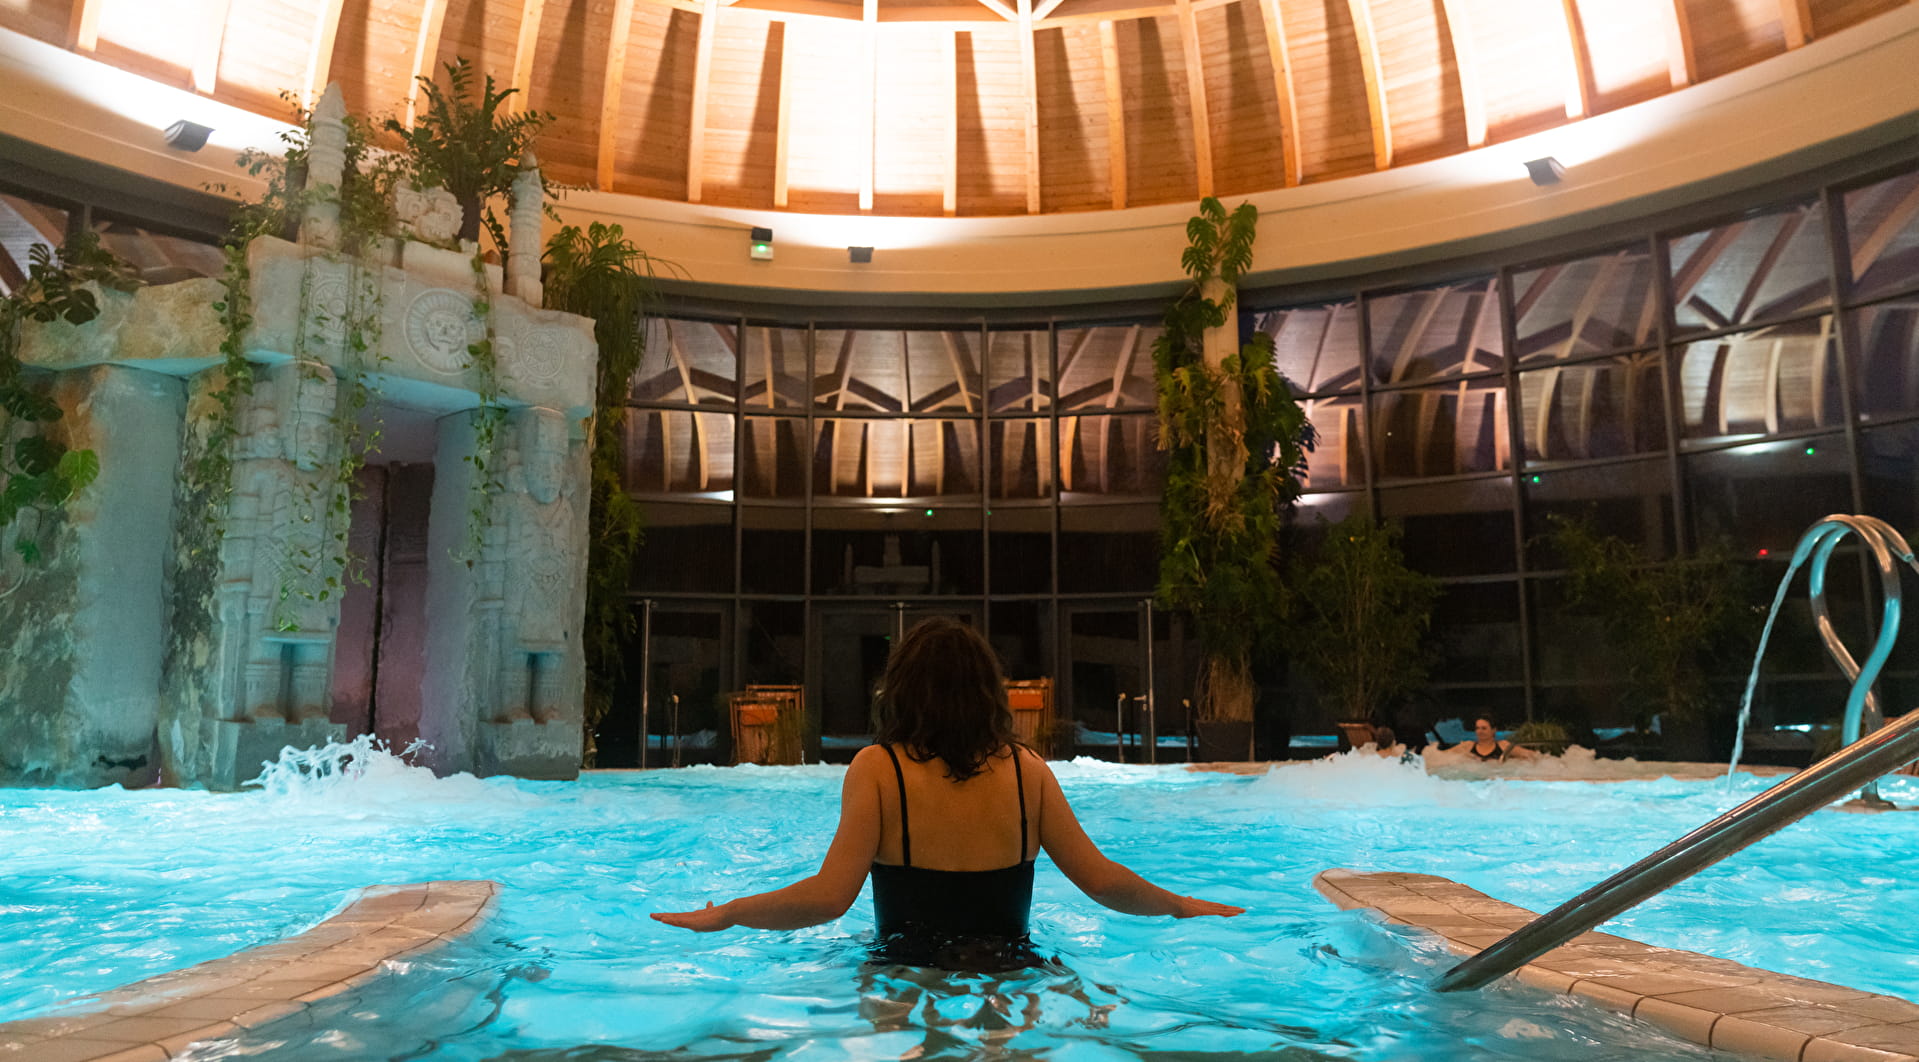 Jardin des Bains thermal spa pool